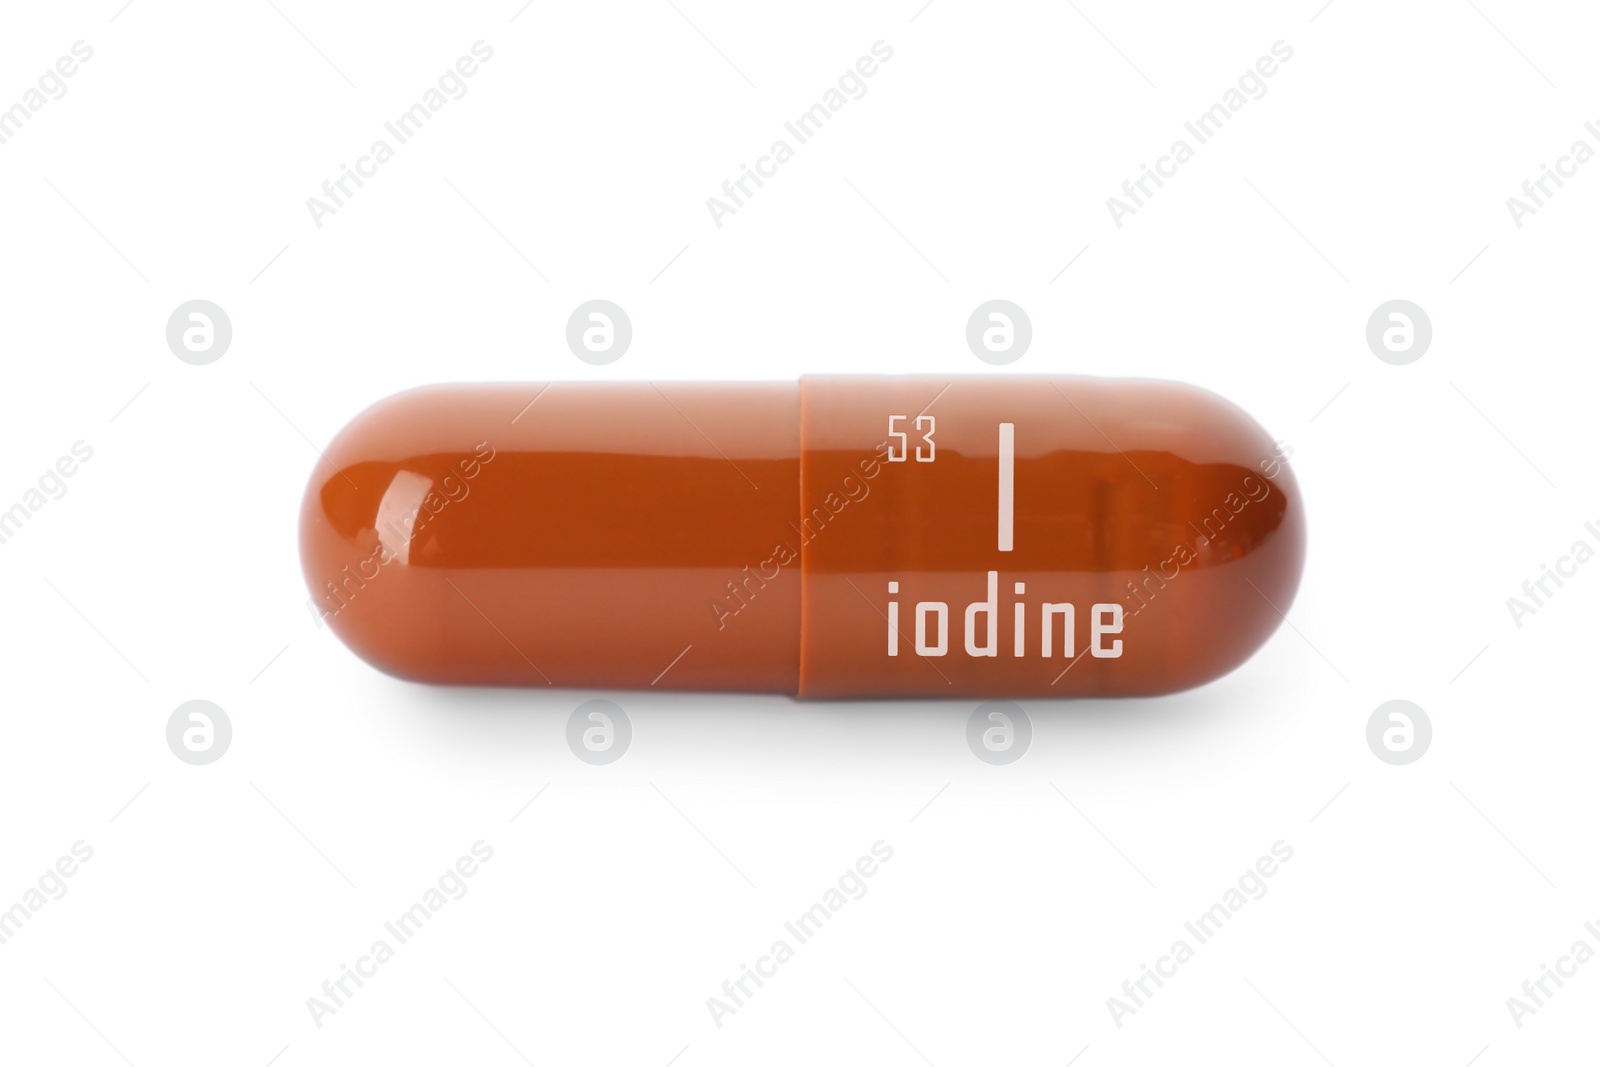 Image of Iodine capsule on white background. Mineral element